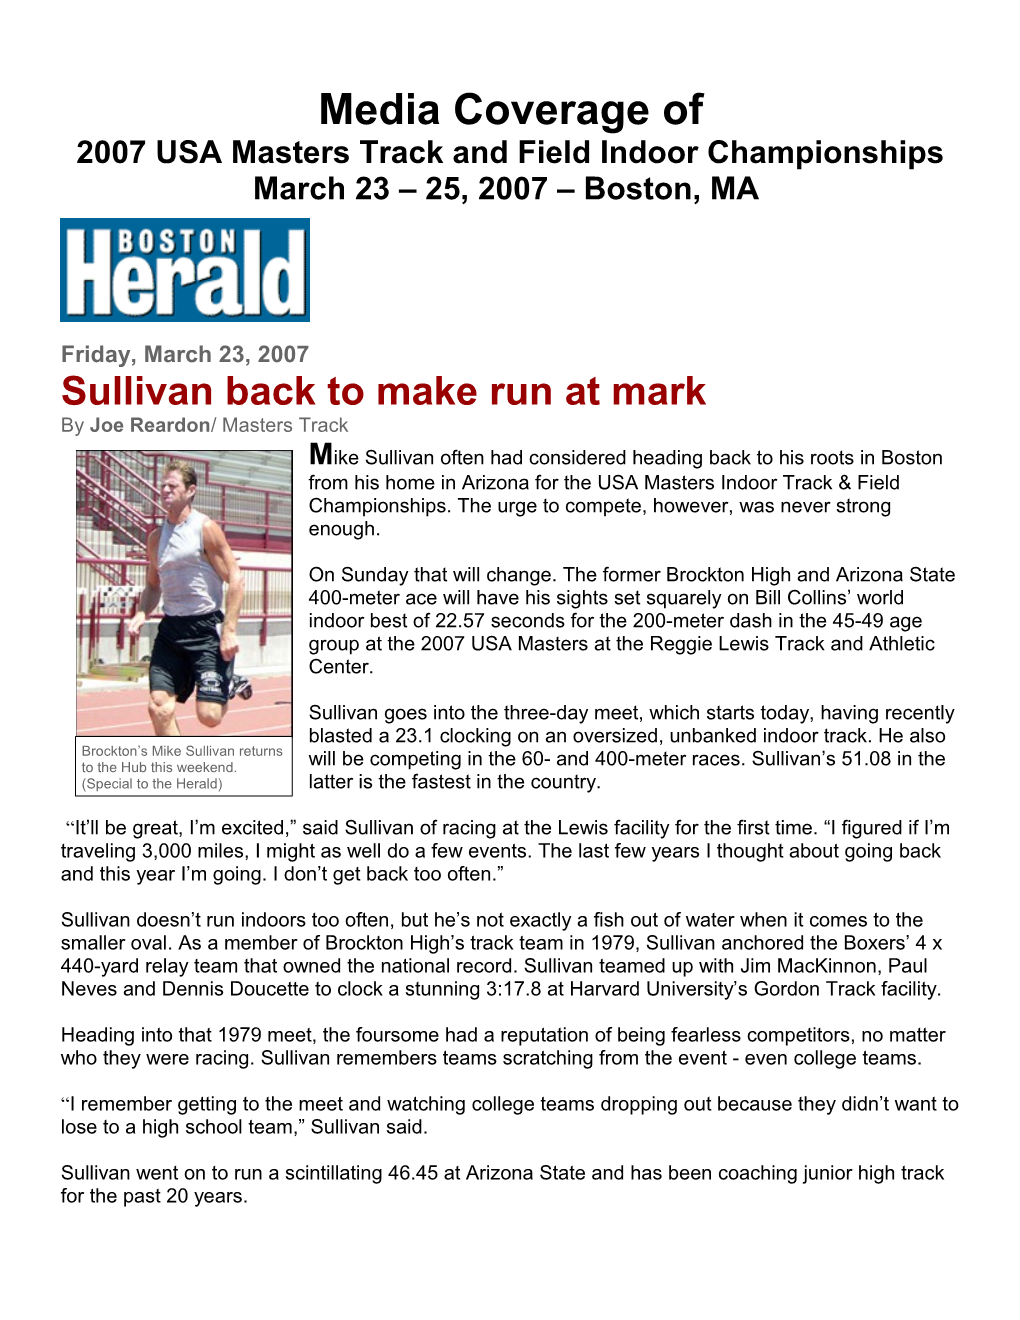 Sullivan Back to Make Run at Mark